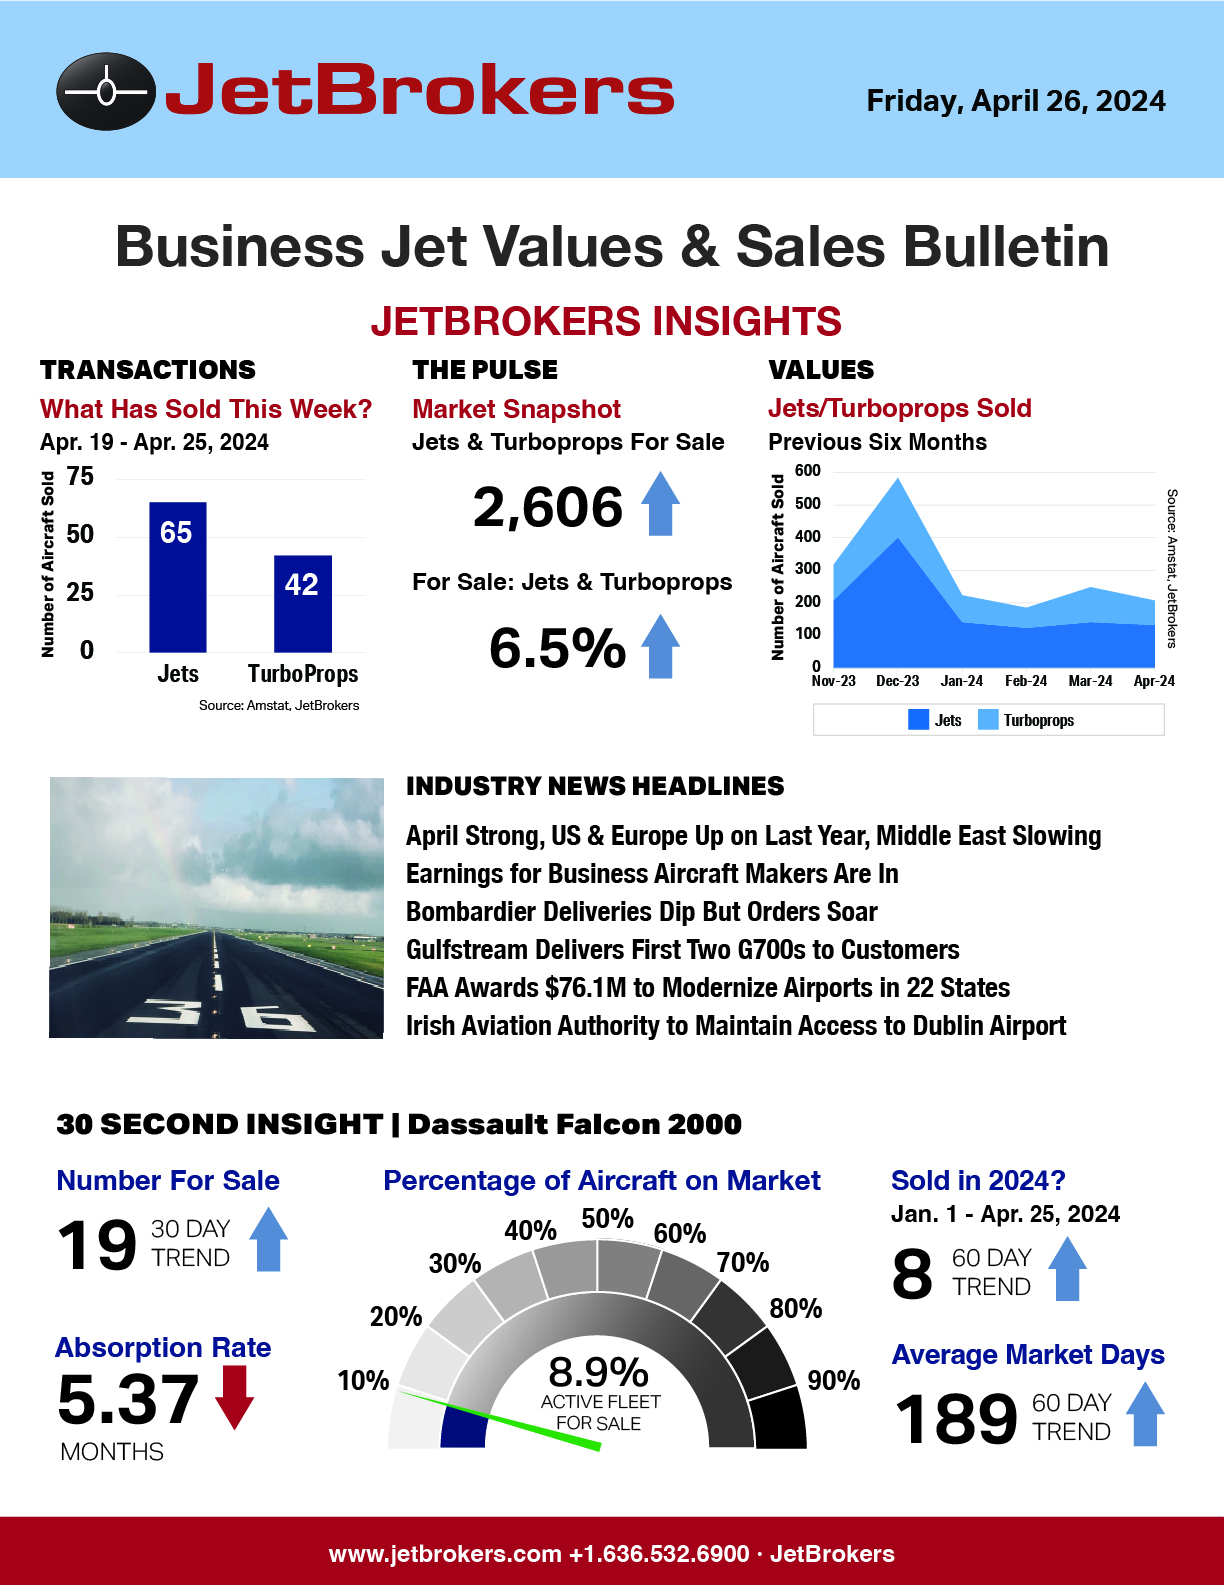 JetBrokers Business Jet Values & Sales Bulletin - April 26, 2024